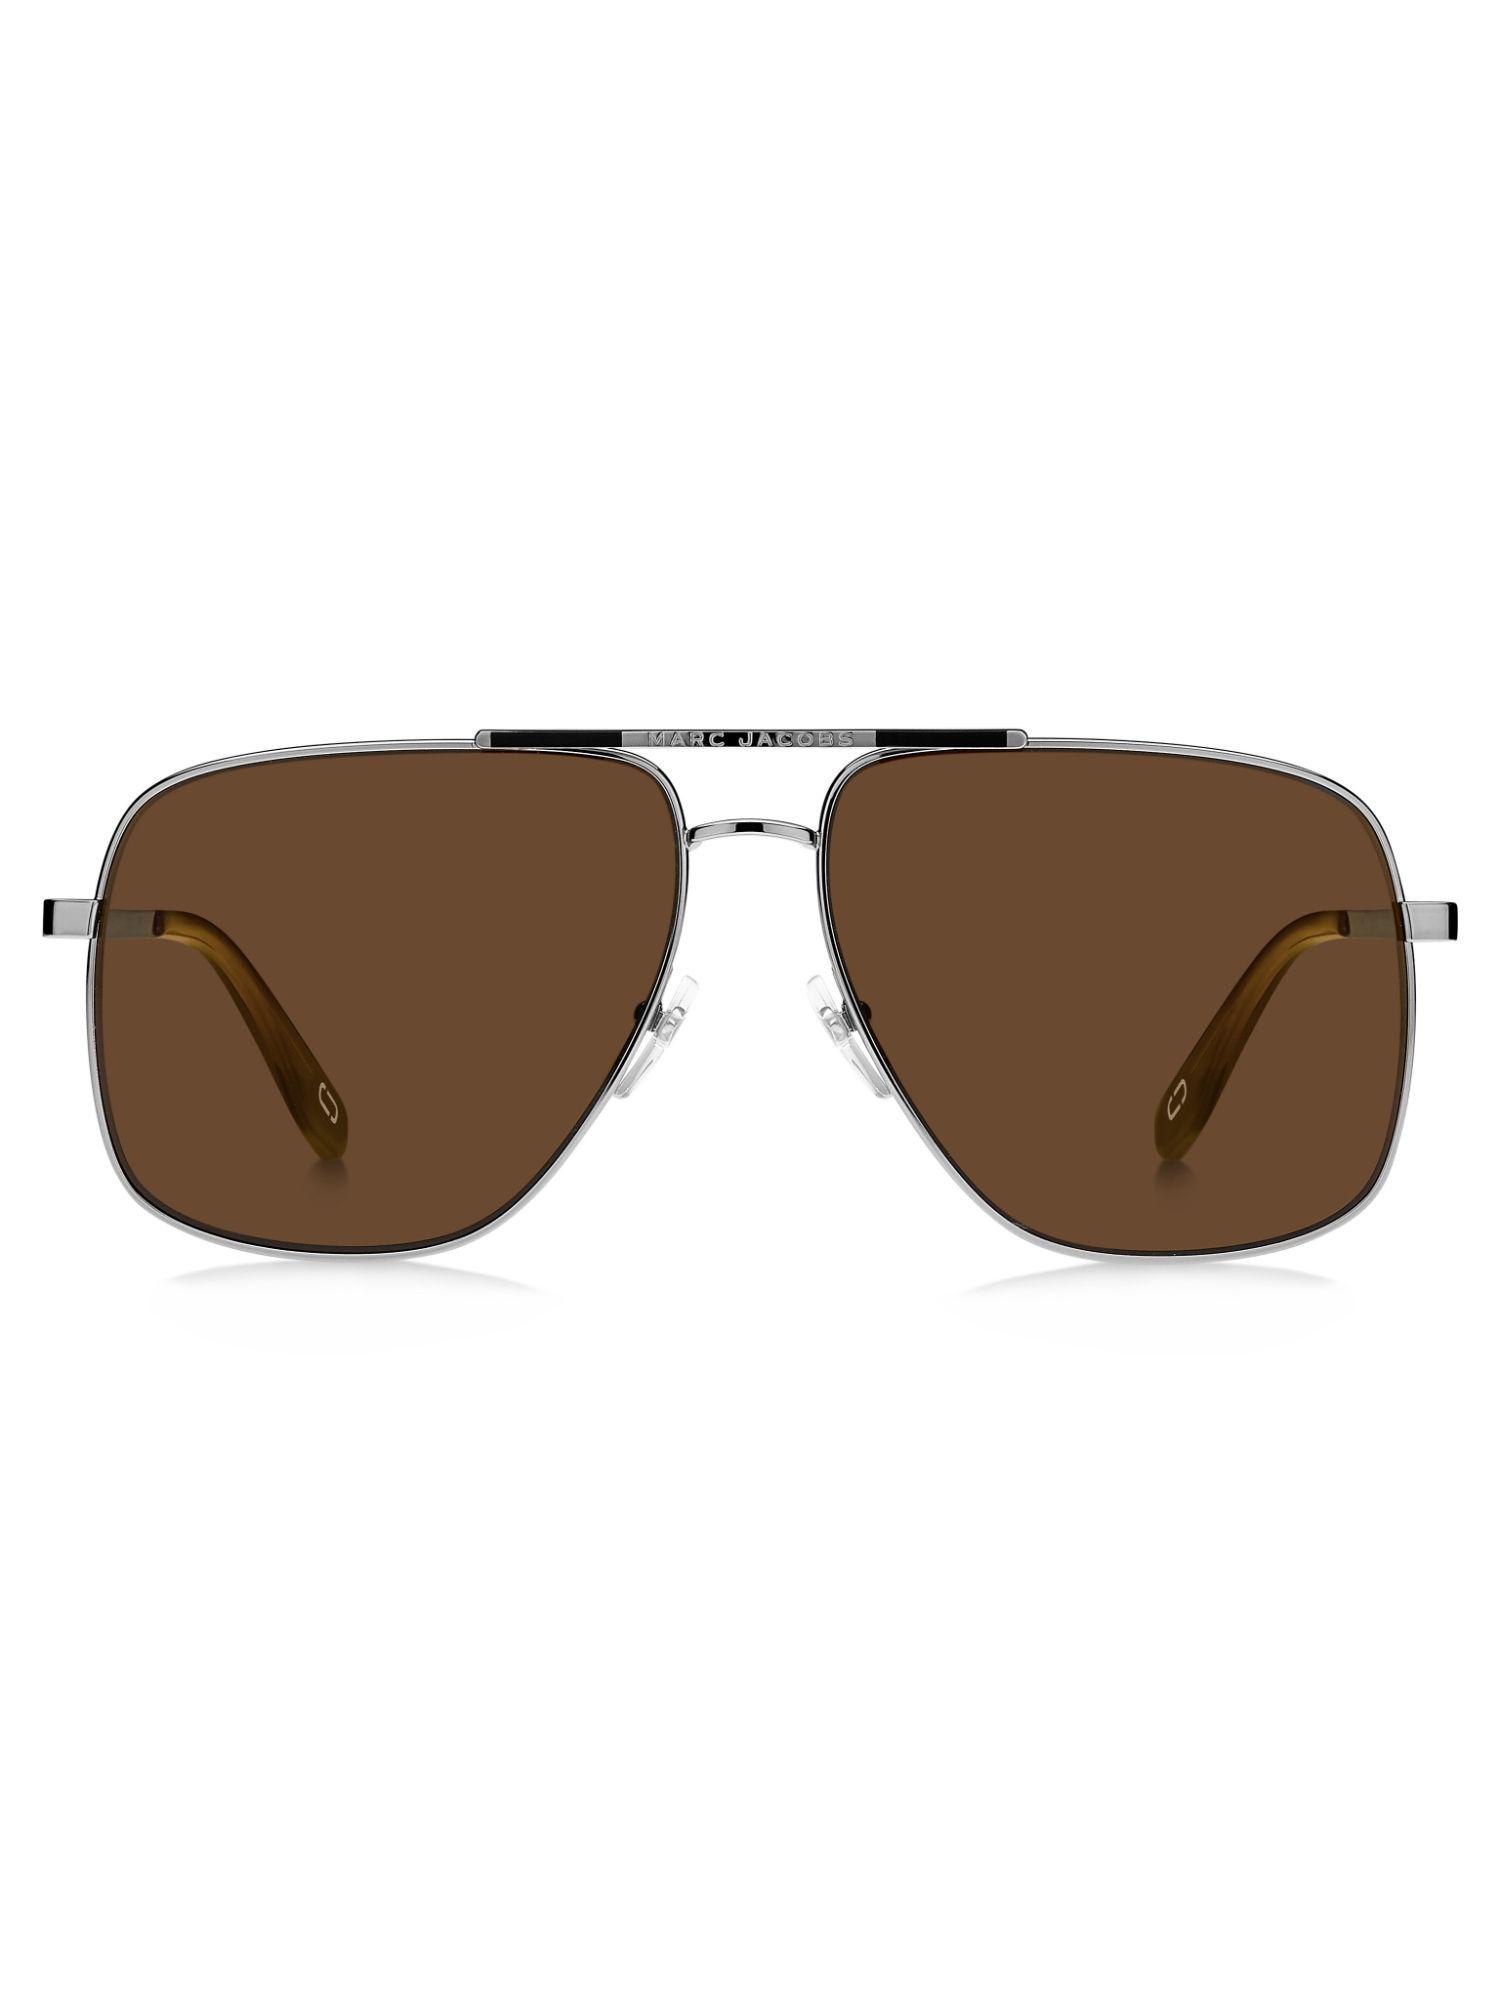 201845wij6070 men square shape brown lens sunglasses